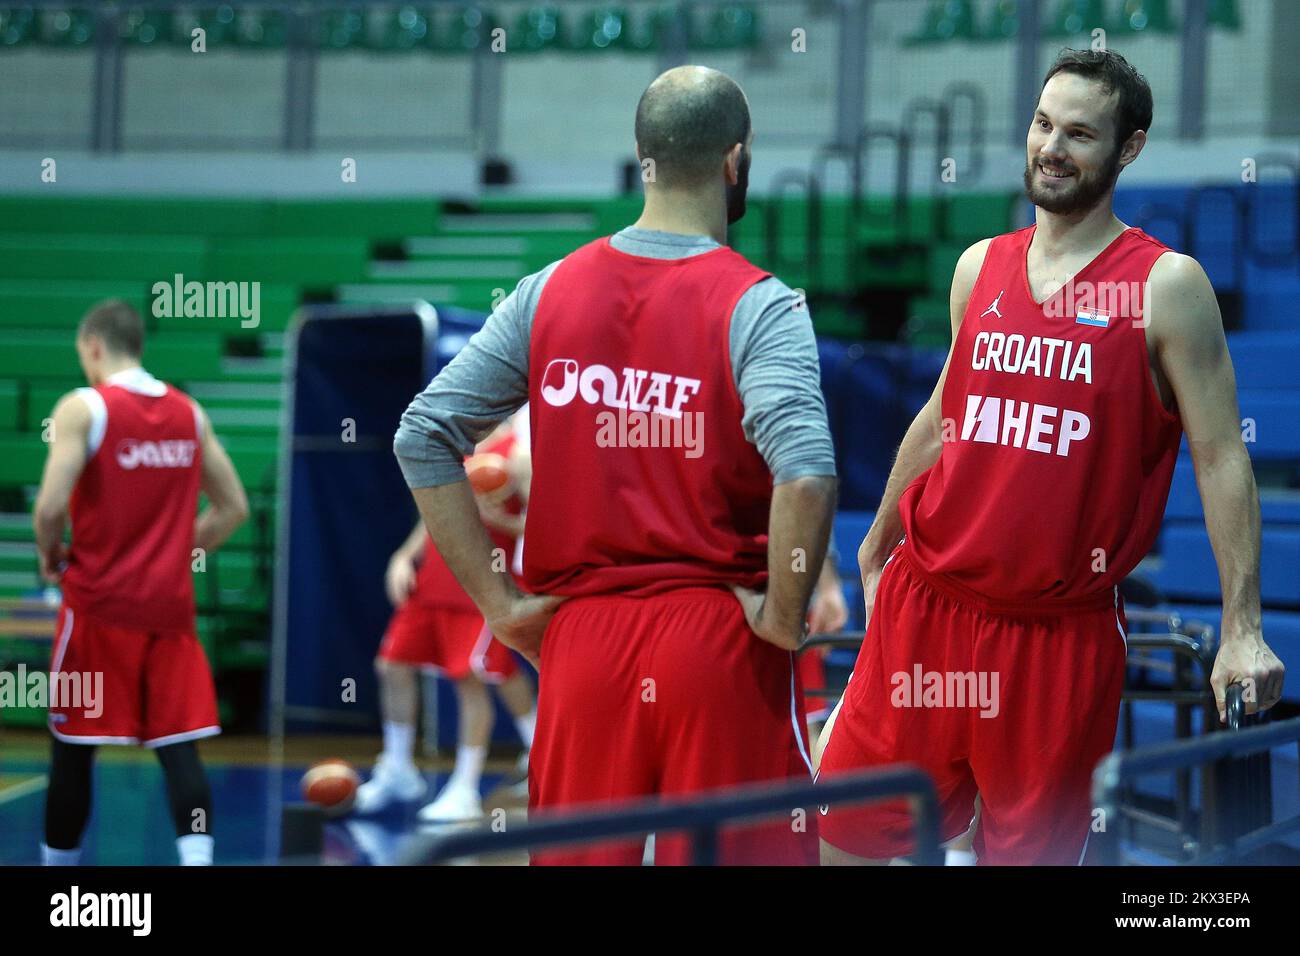 20.11.2017., Drazen Petrovic Basketball Hall, Zagreb, Croatia - Training of the Croatian men's basketball team. Miro Bilan. Photo: Goran Stanzl/PIXSELL Stock Photo